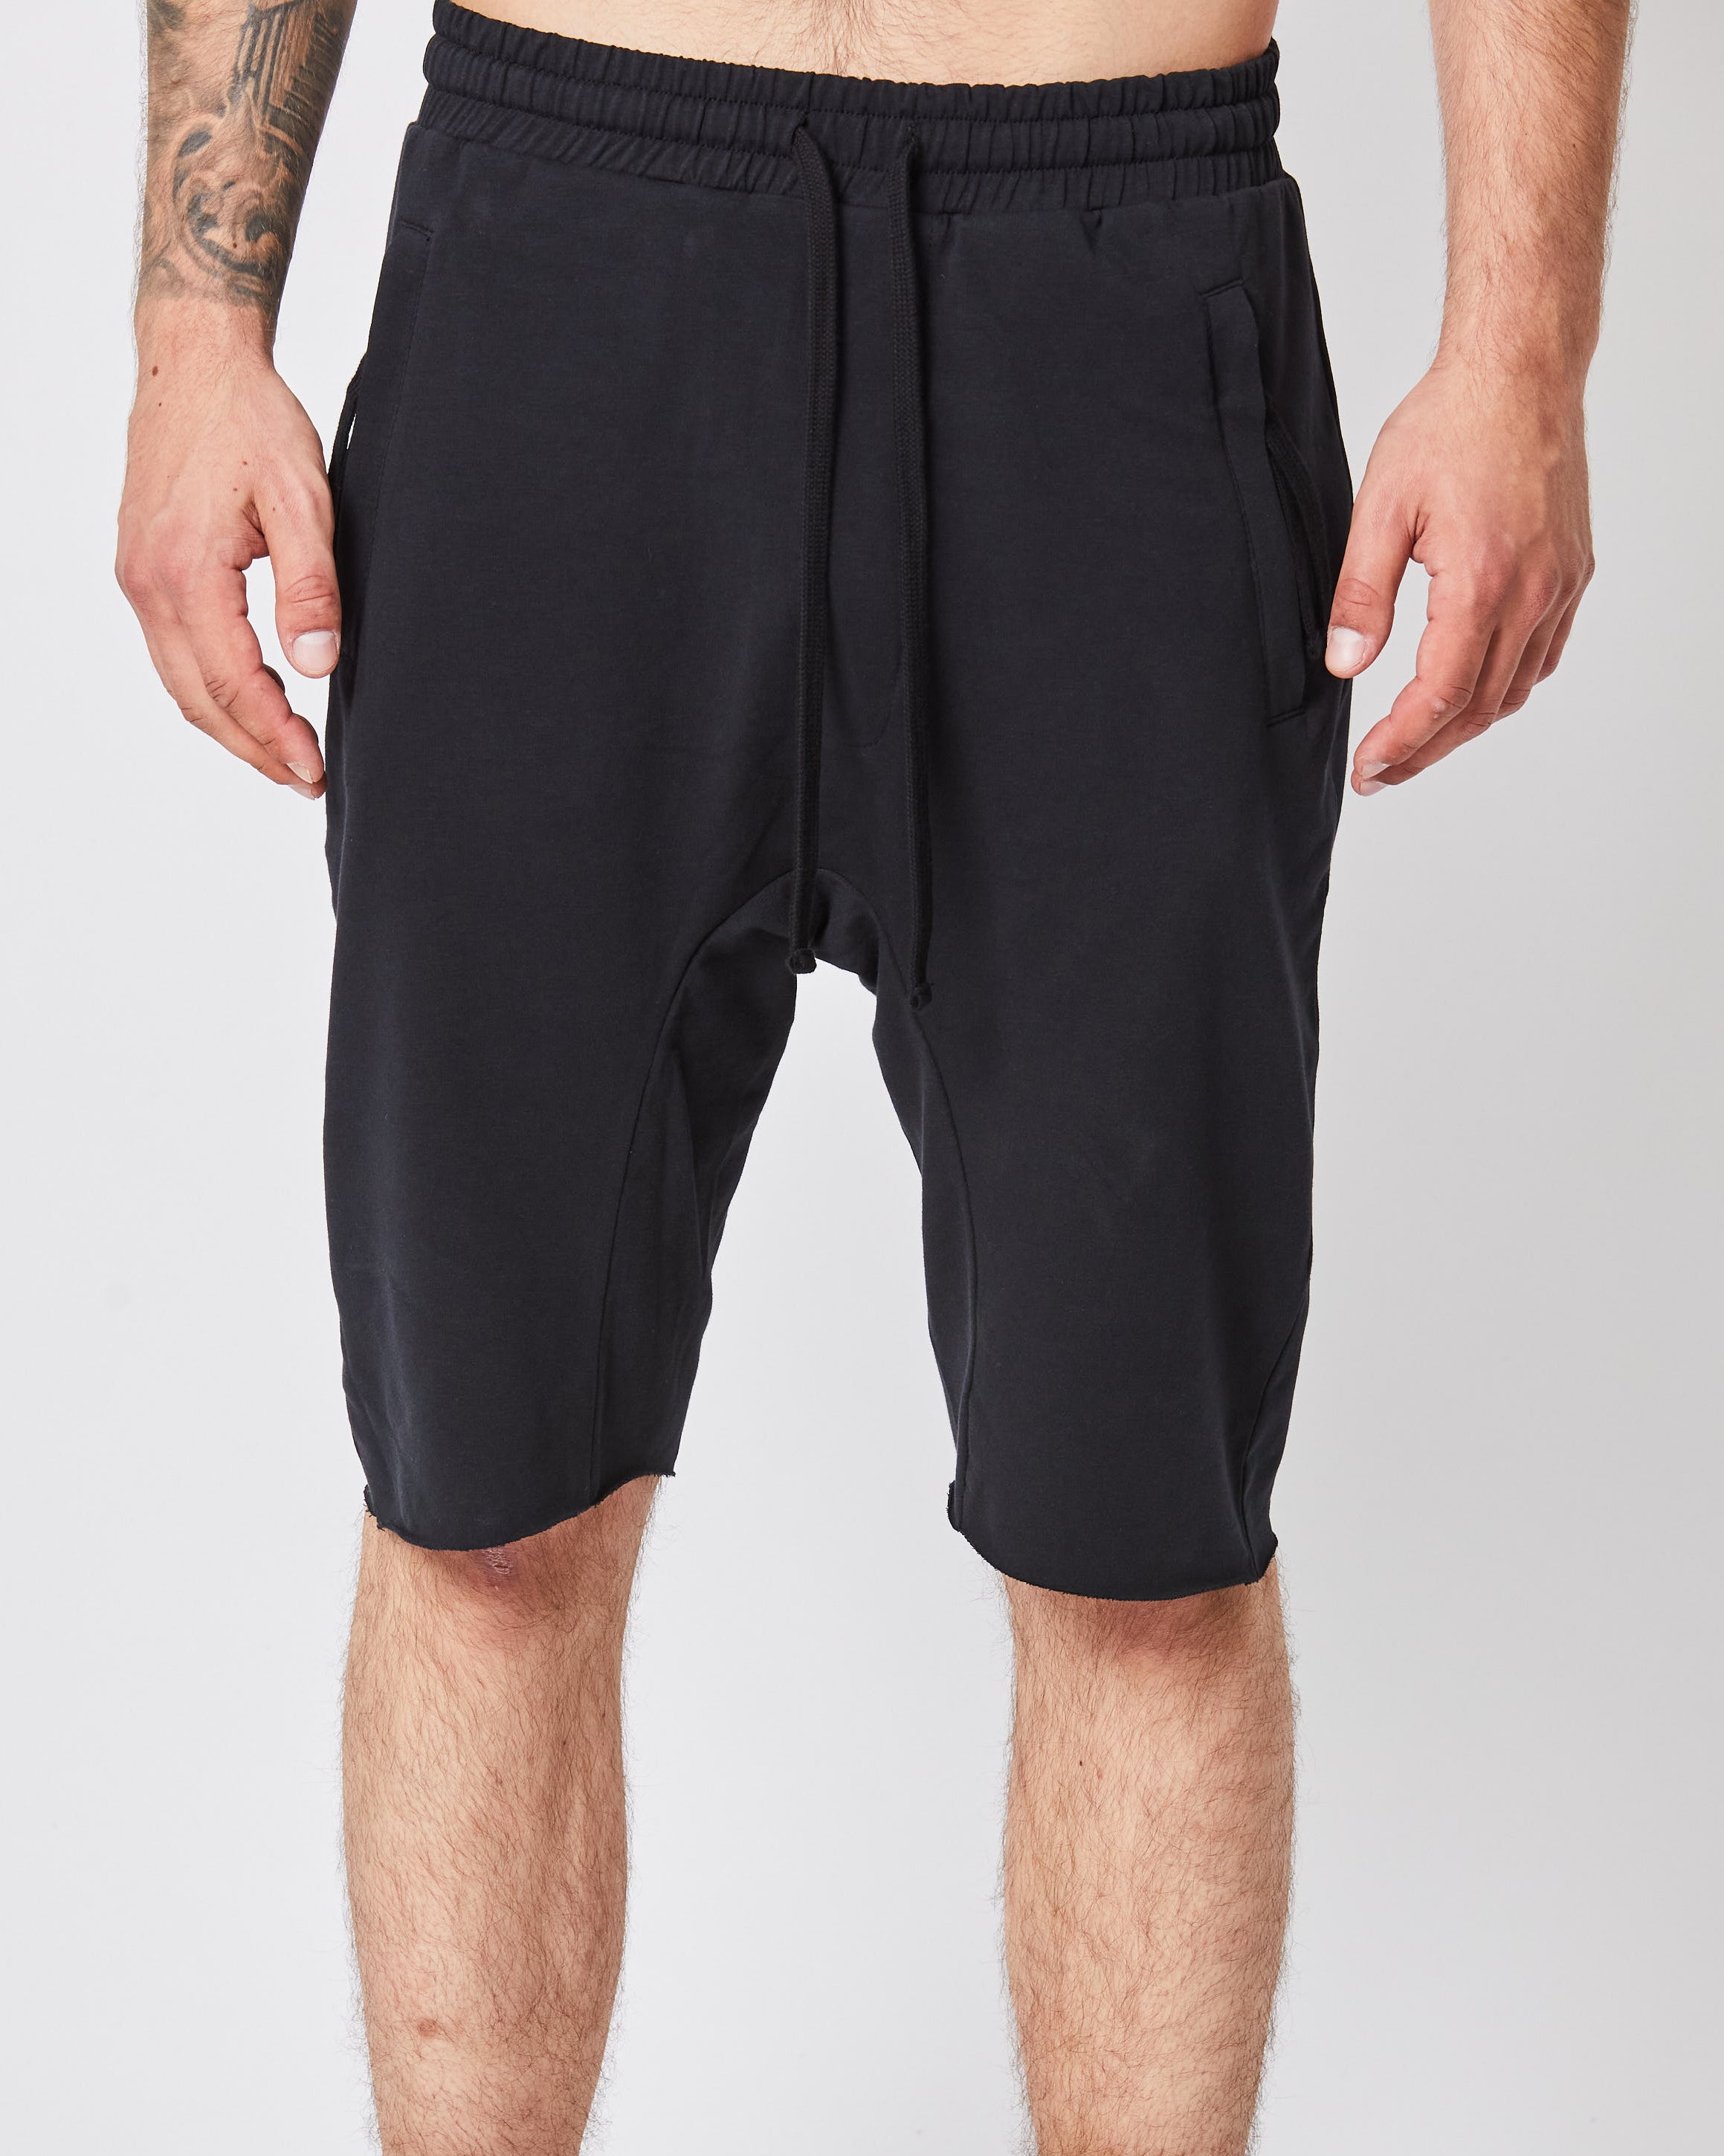 Top-Verkaufserfolg Black Stretch Cotton Modal 379 Crotch MST – The Shorts Archive Drop